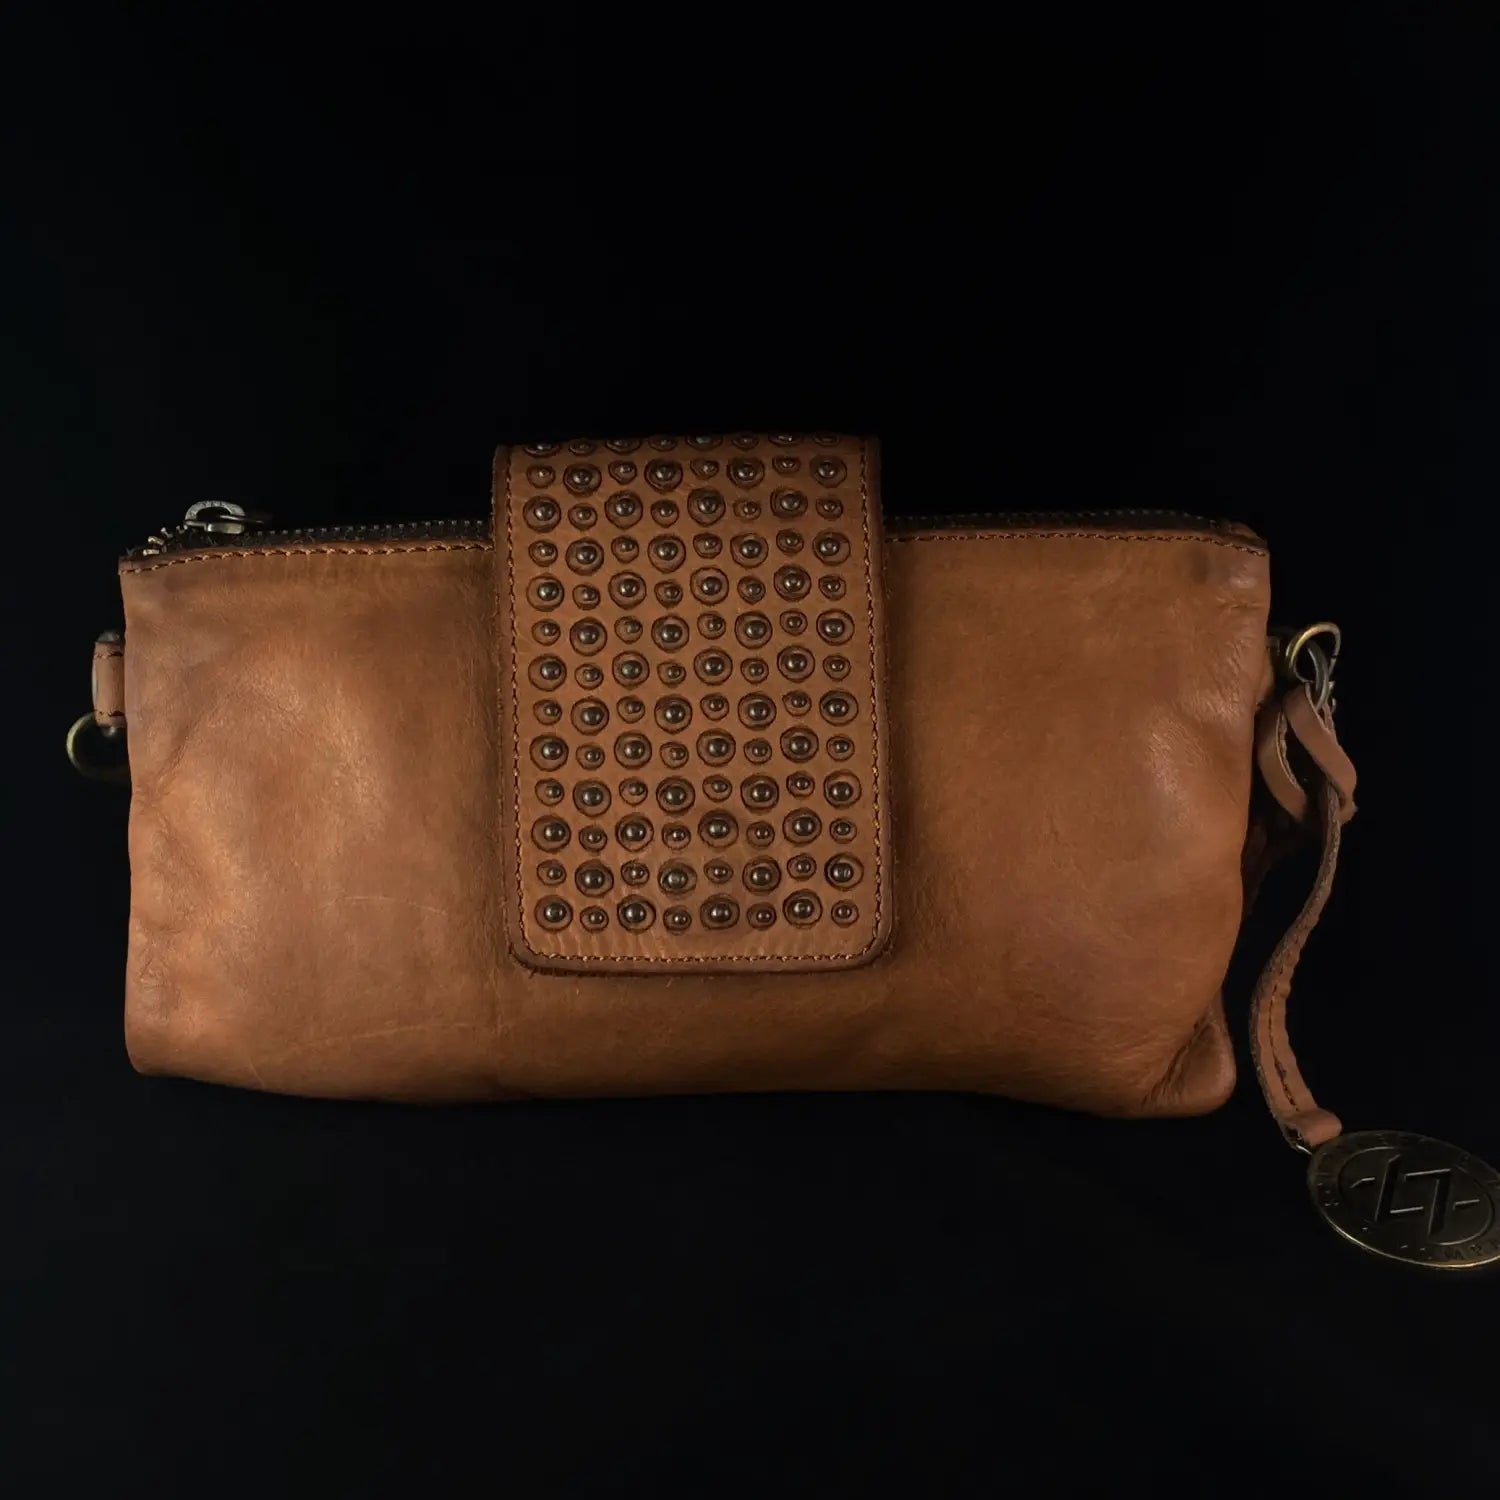 KOMPANERO Italian Woven Cognac Leather Tote Bag CROSSBODY